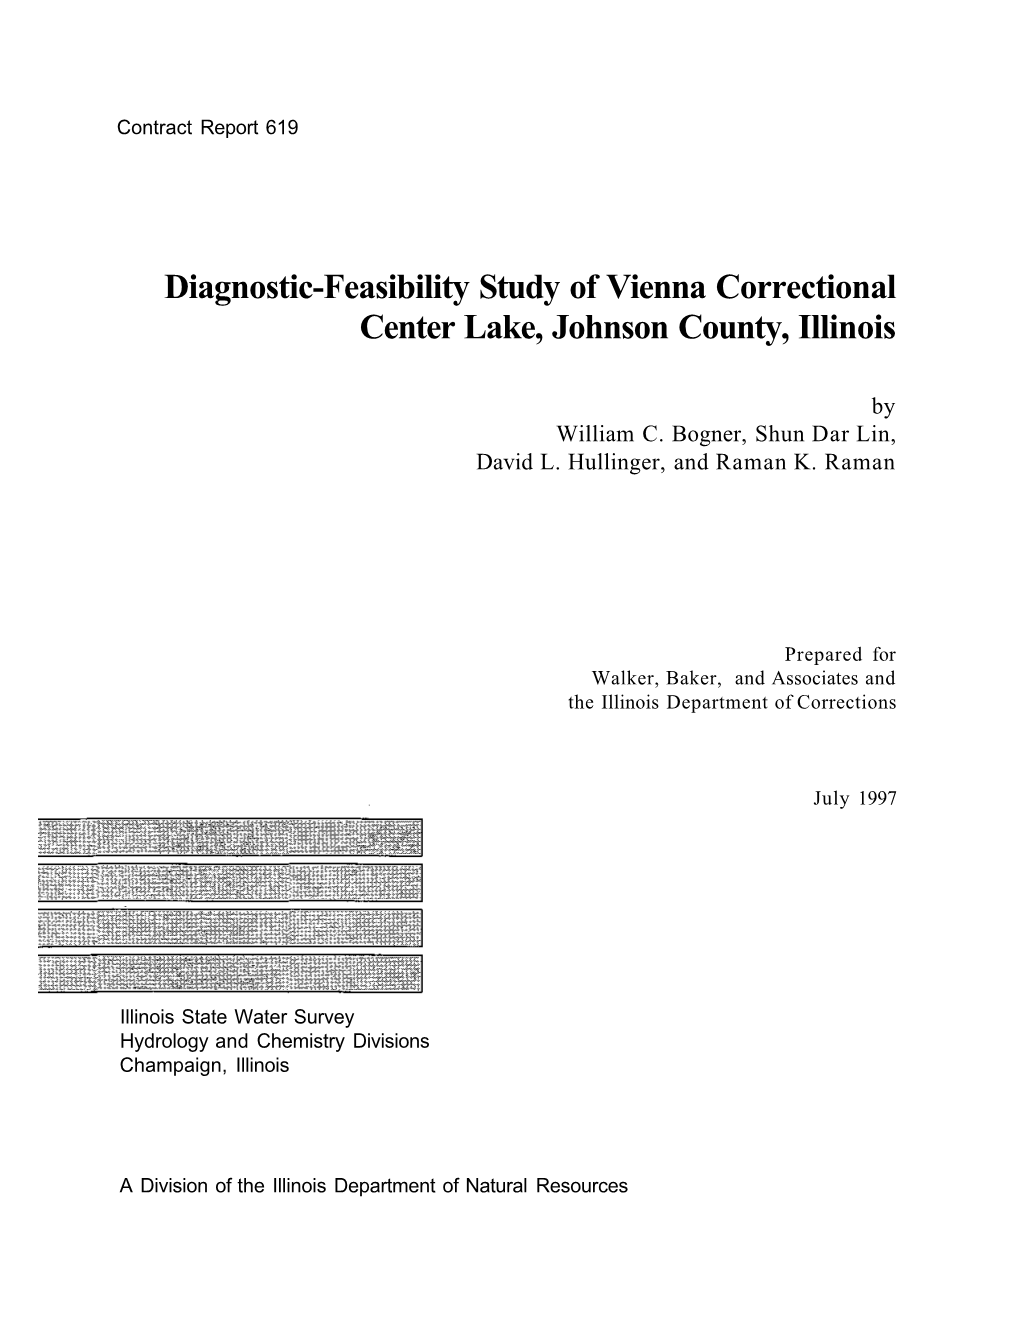 Diagnostic-Feasibility Study of Vienna Correctional Center Lake, Johnson County, Illinois. Champaign, IL